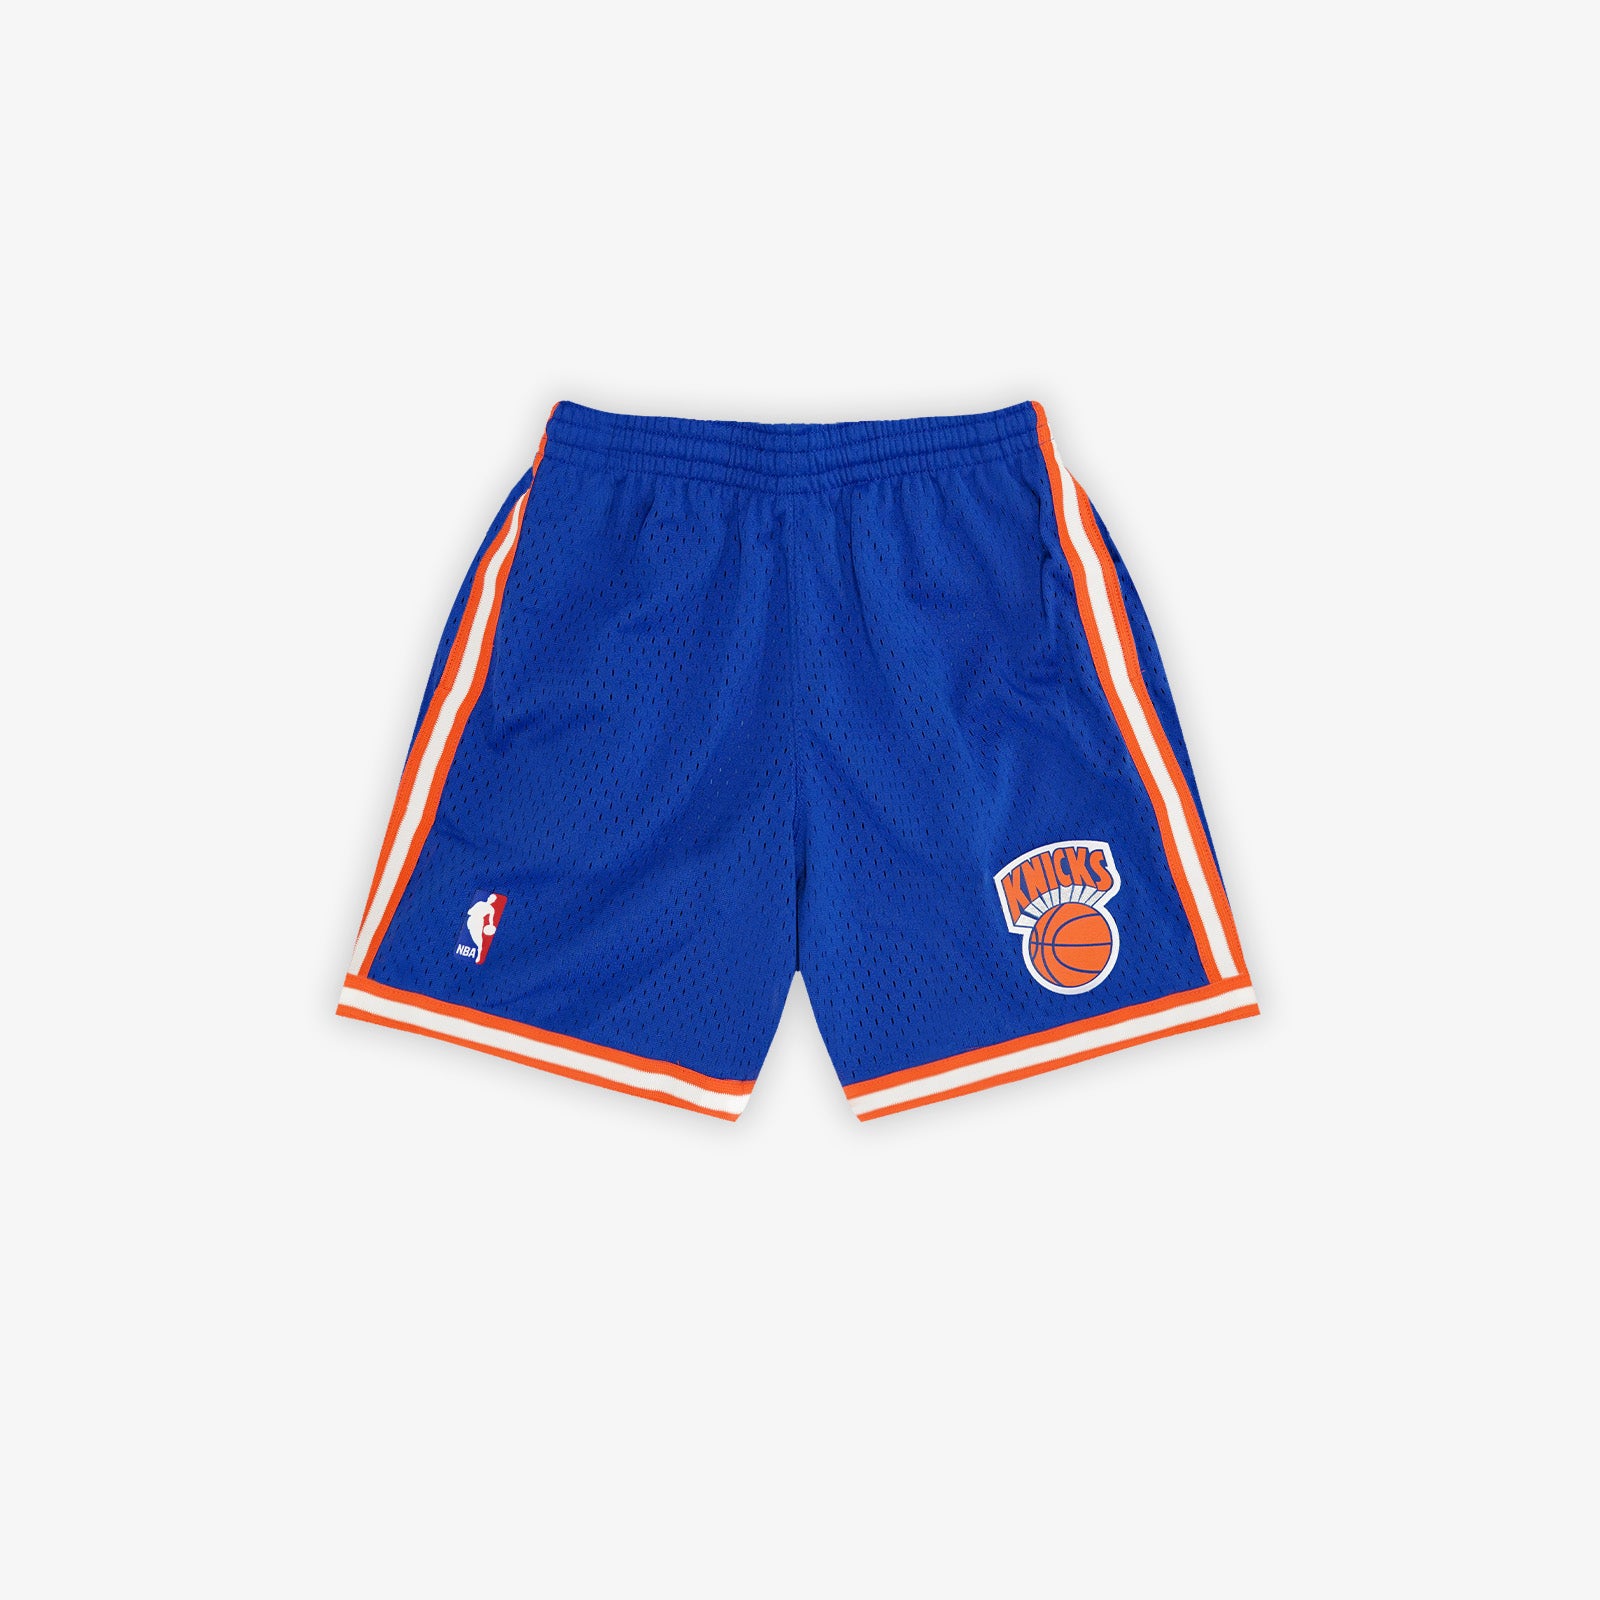 Nike Men's Shorts Size Large Orange Navy Blue L New York Knicks